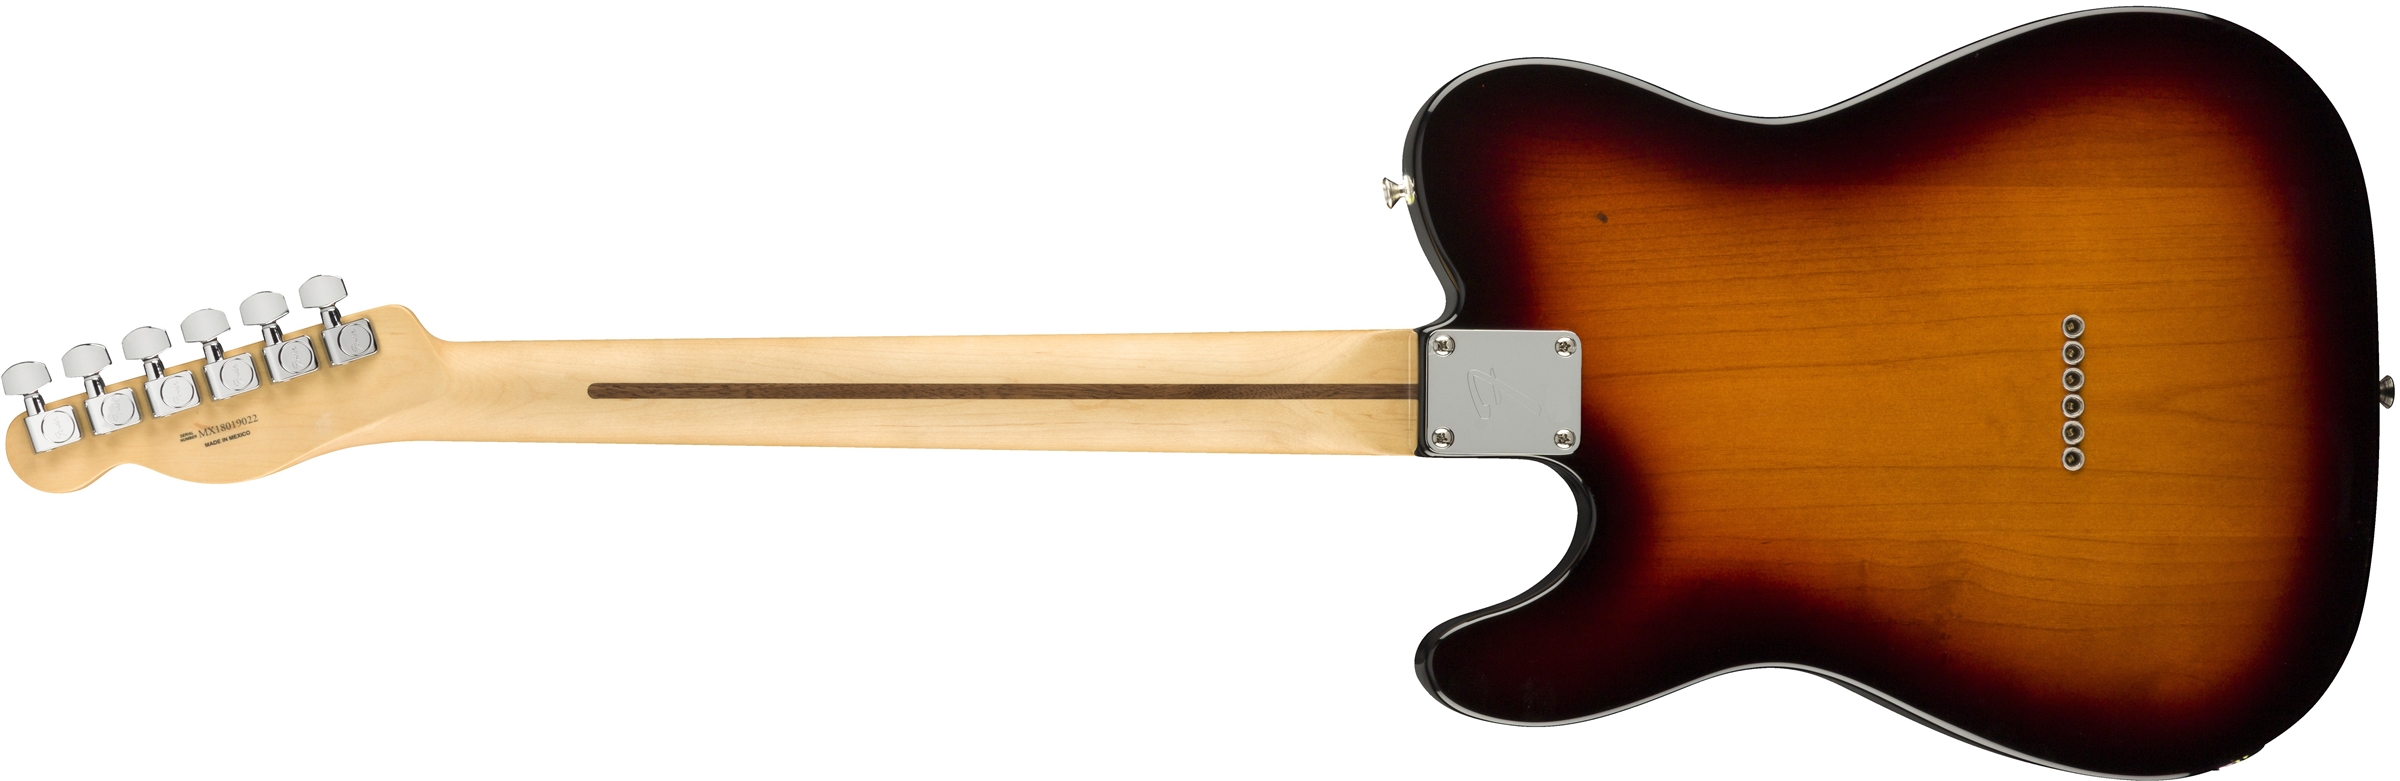 Fender Tele Player Mex Mn - 3-color Sunburst - Guitarra eléctrica con forma de tel - Variation 2